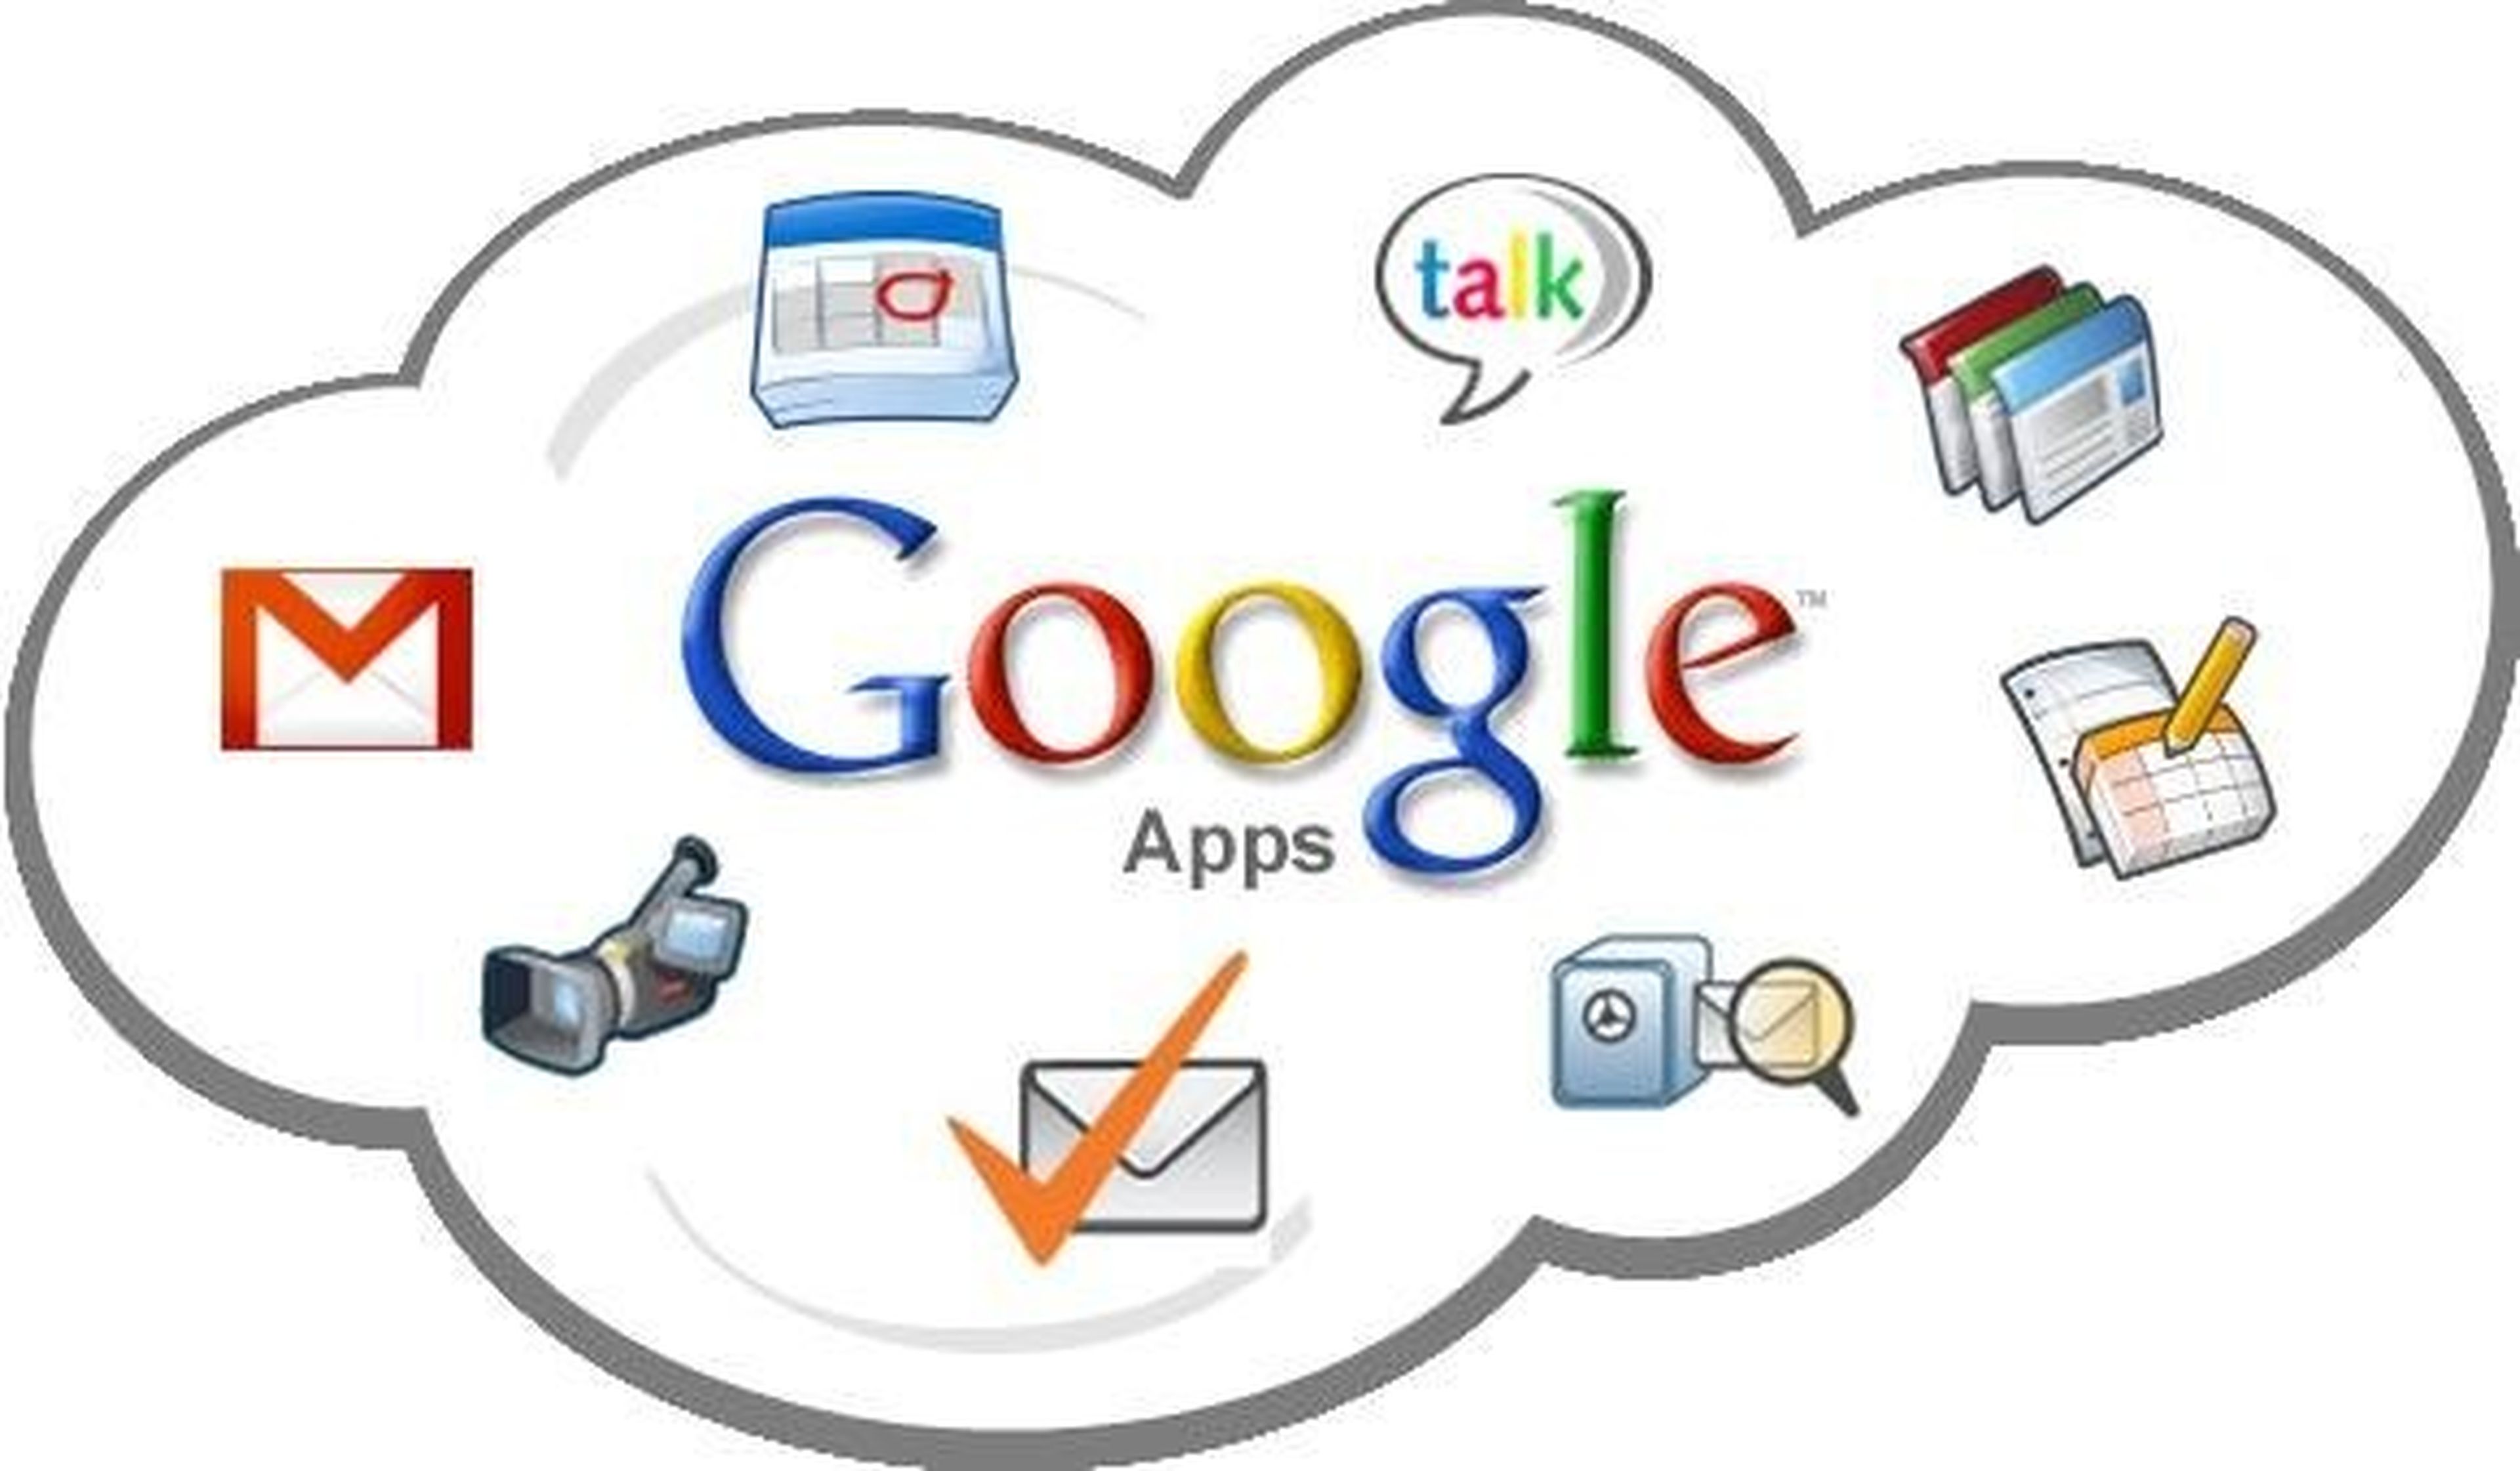 Сервис сайты google. Google apps. Сервисы Google. Облачные сервисы гугл. Значки сервисов Google.